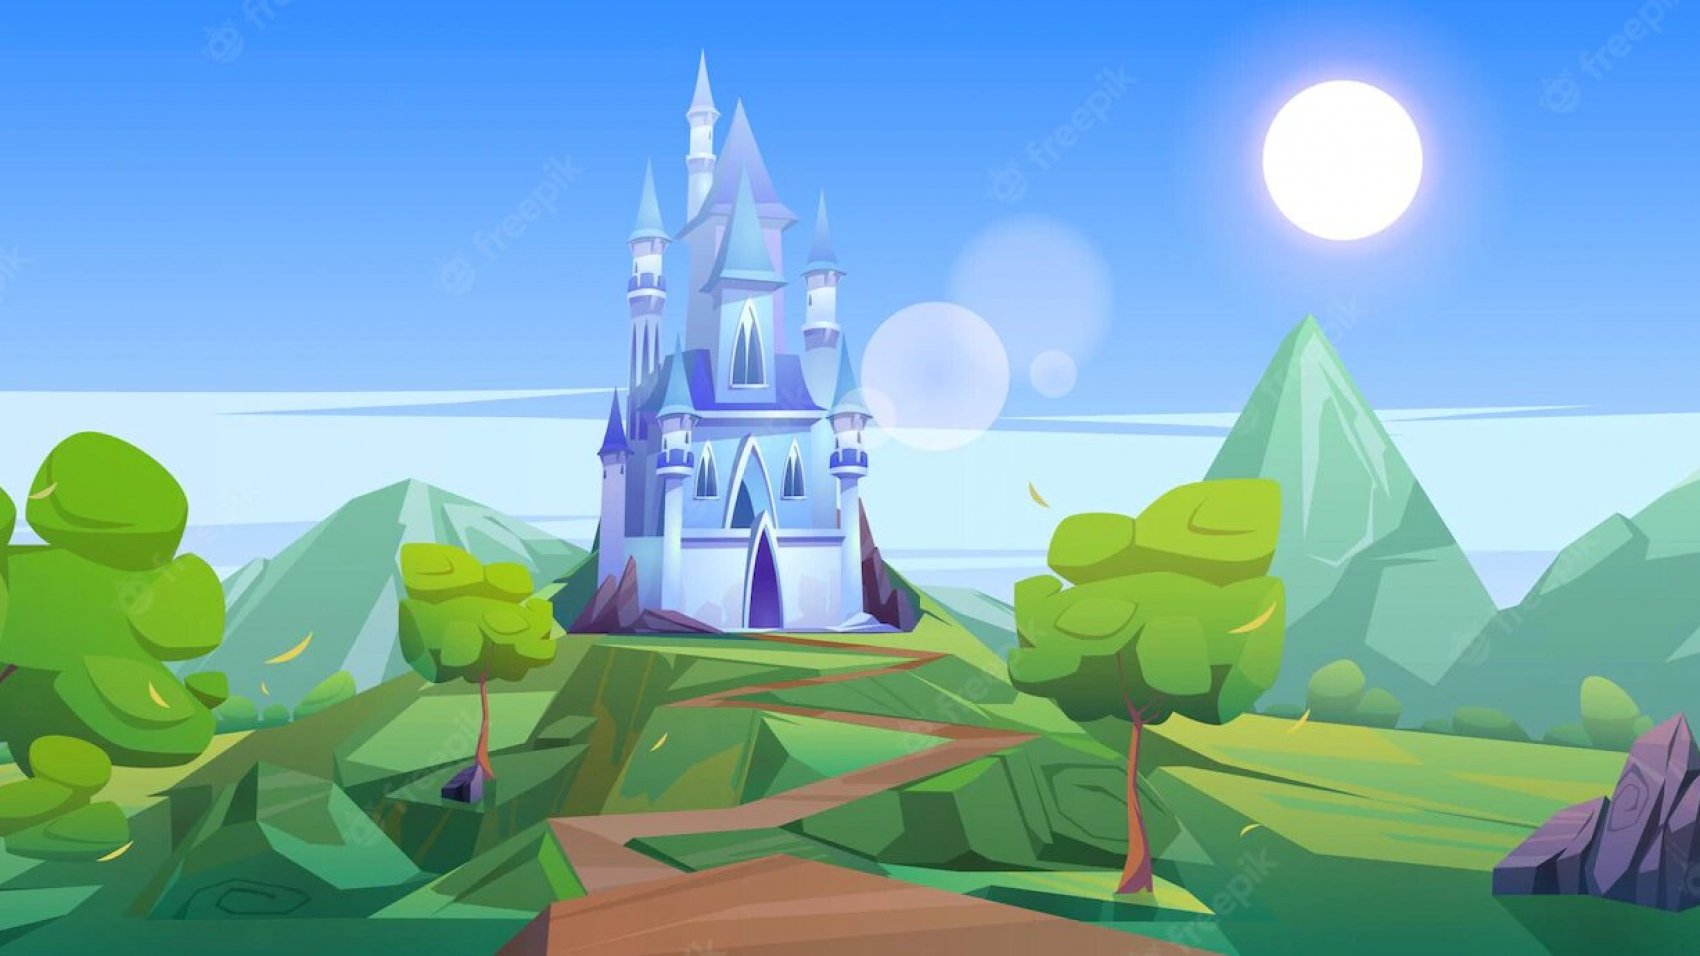 fairy-tale-castle-in-mountains-vector-cartoon-landscape-of-fairytale-kingdom-with-rocks_107791-4999